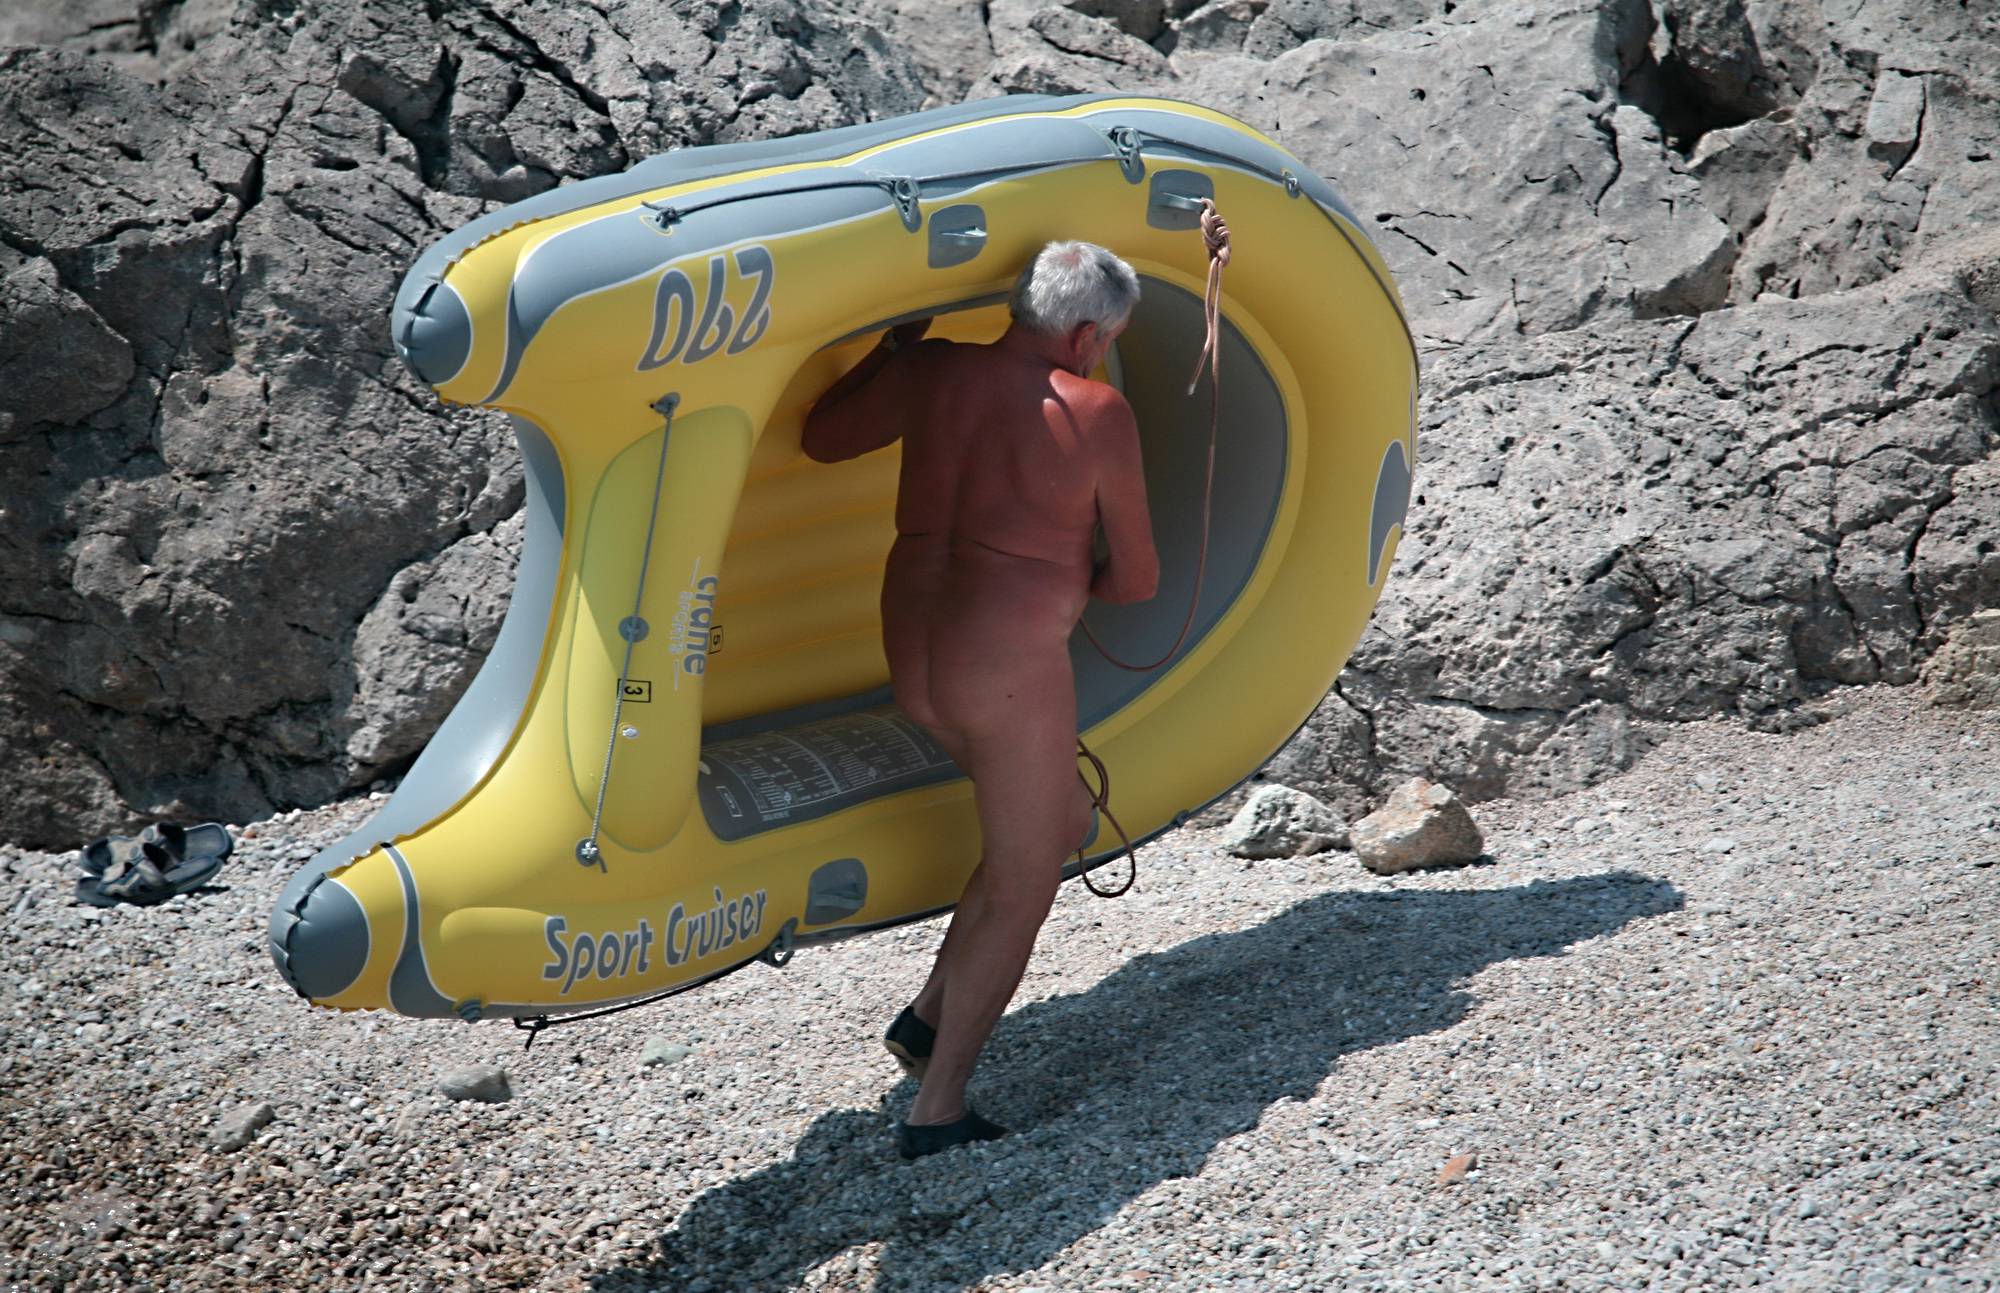 Lone Nudist in Yellow Boat - 2